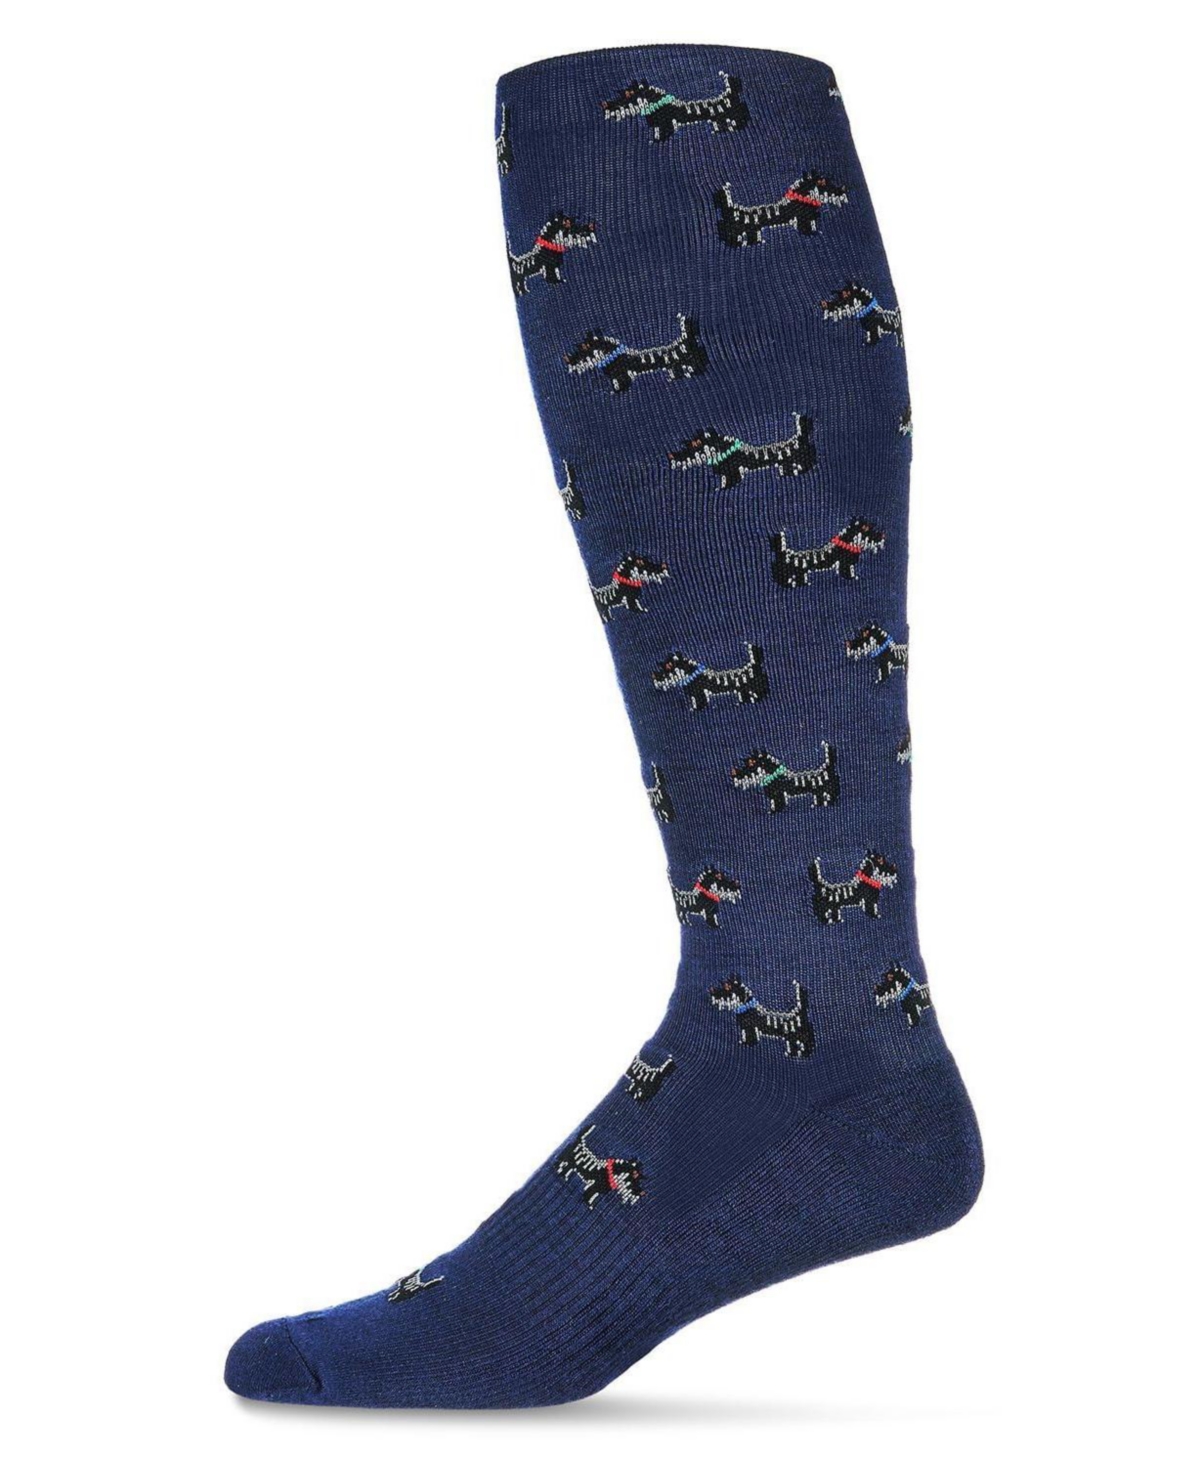 Men's Scotties Compression Socks - Navy